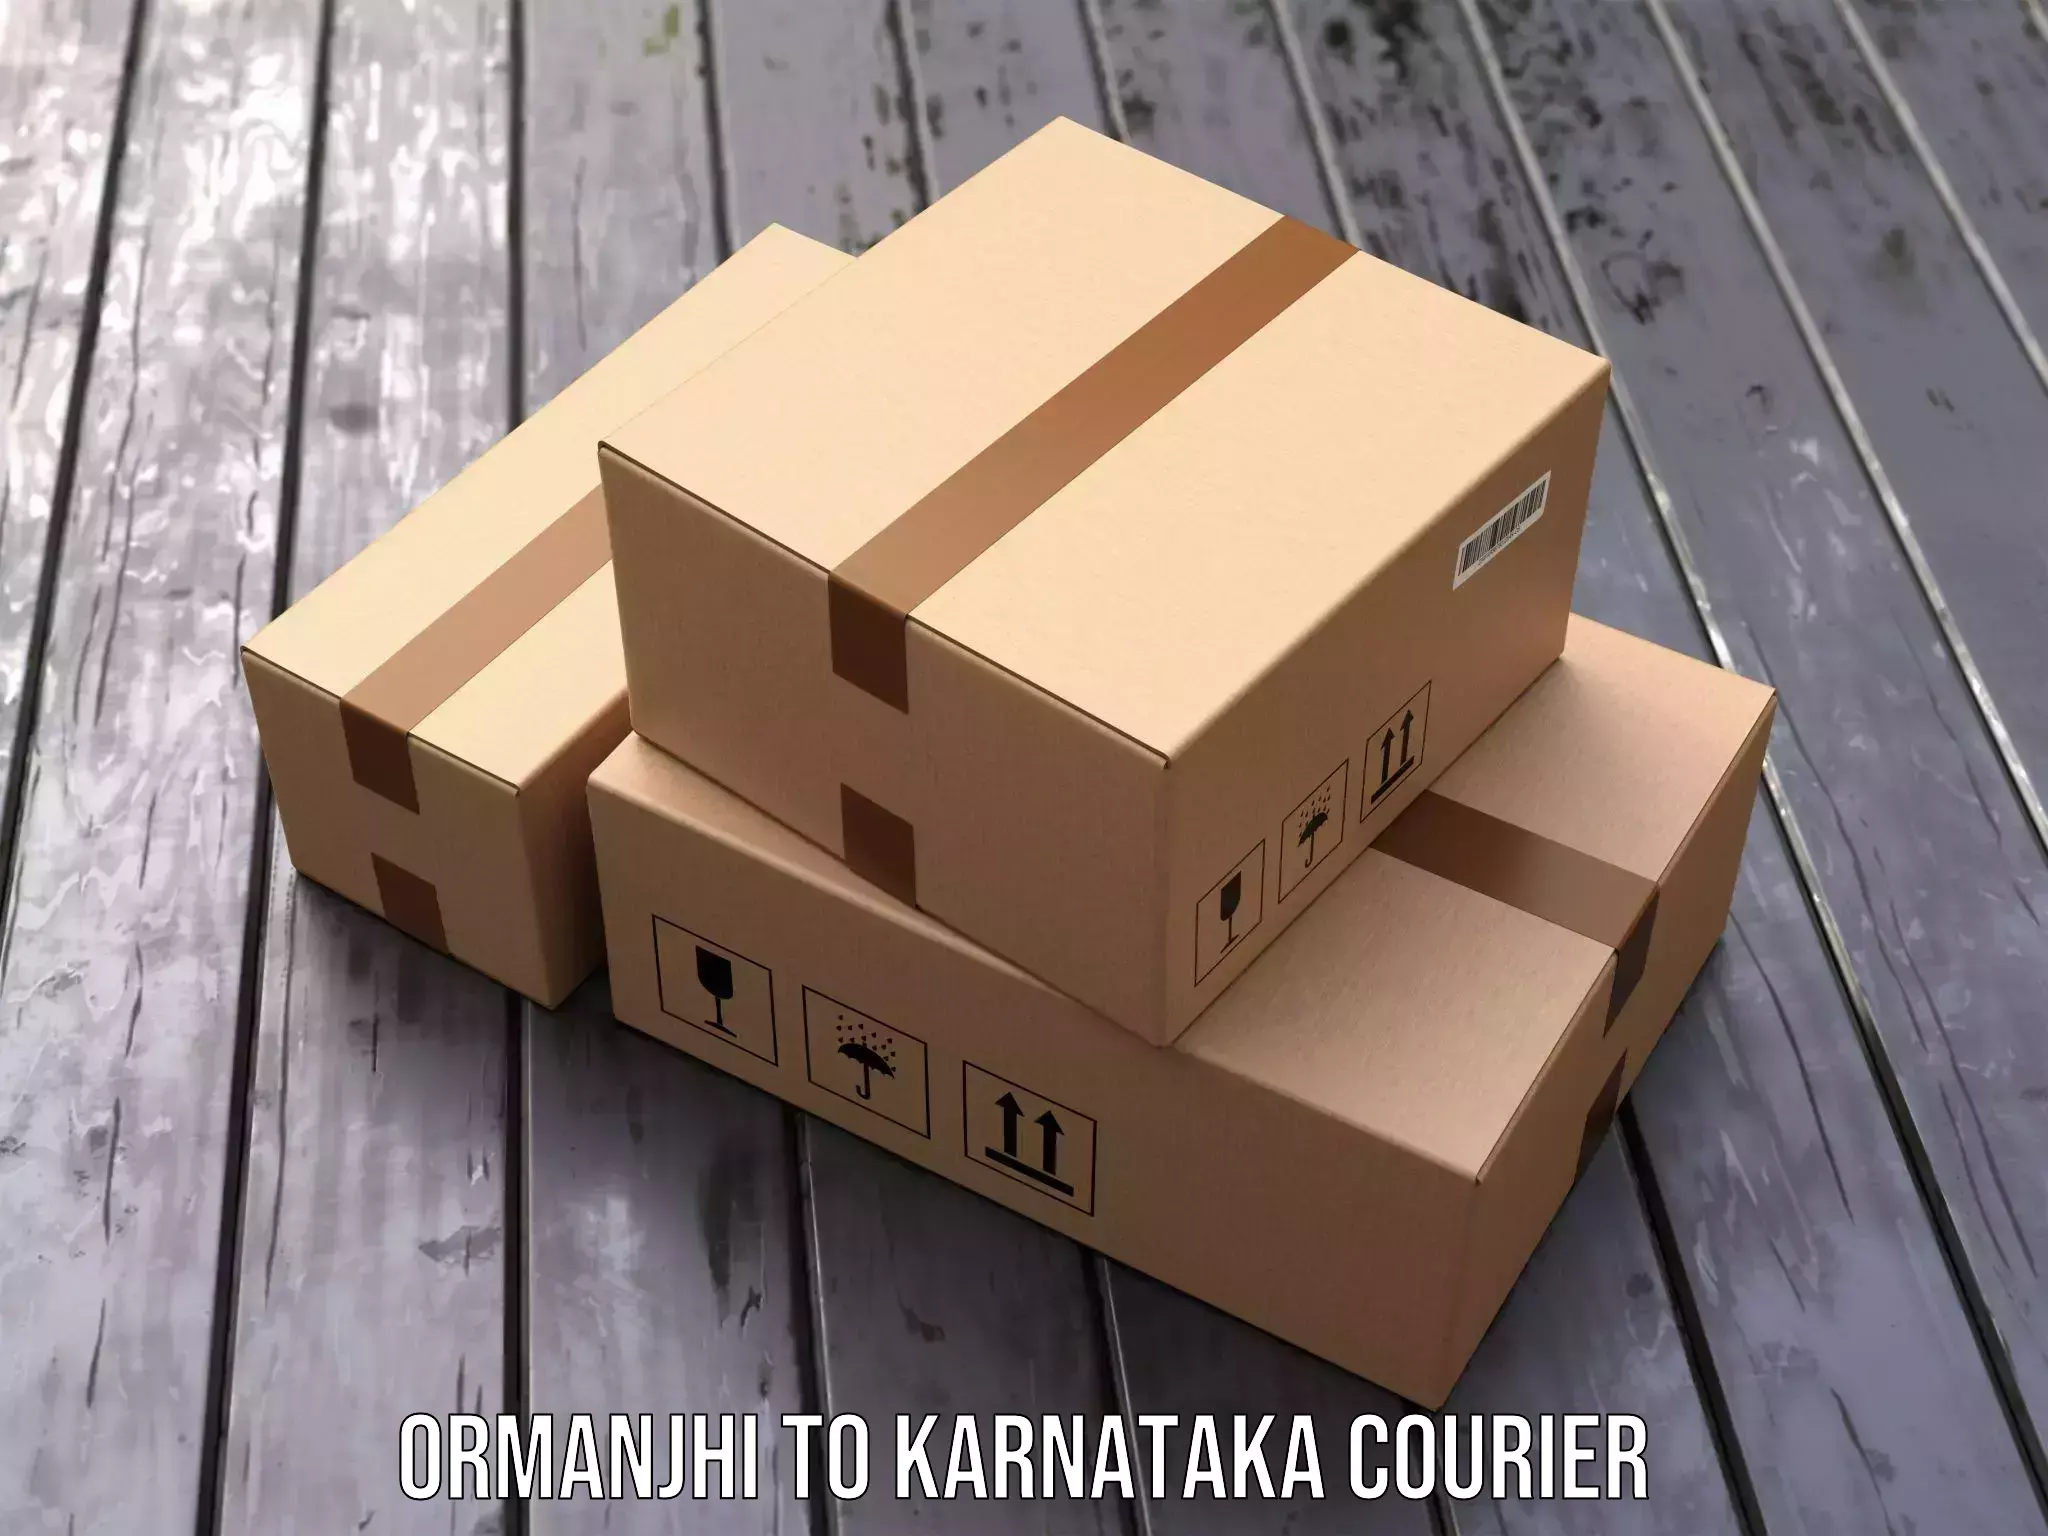 Courier service comparison Ormanjhi to Karnataka